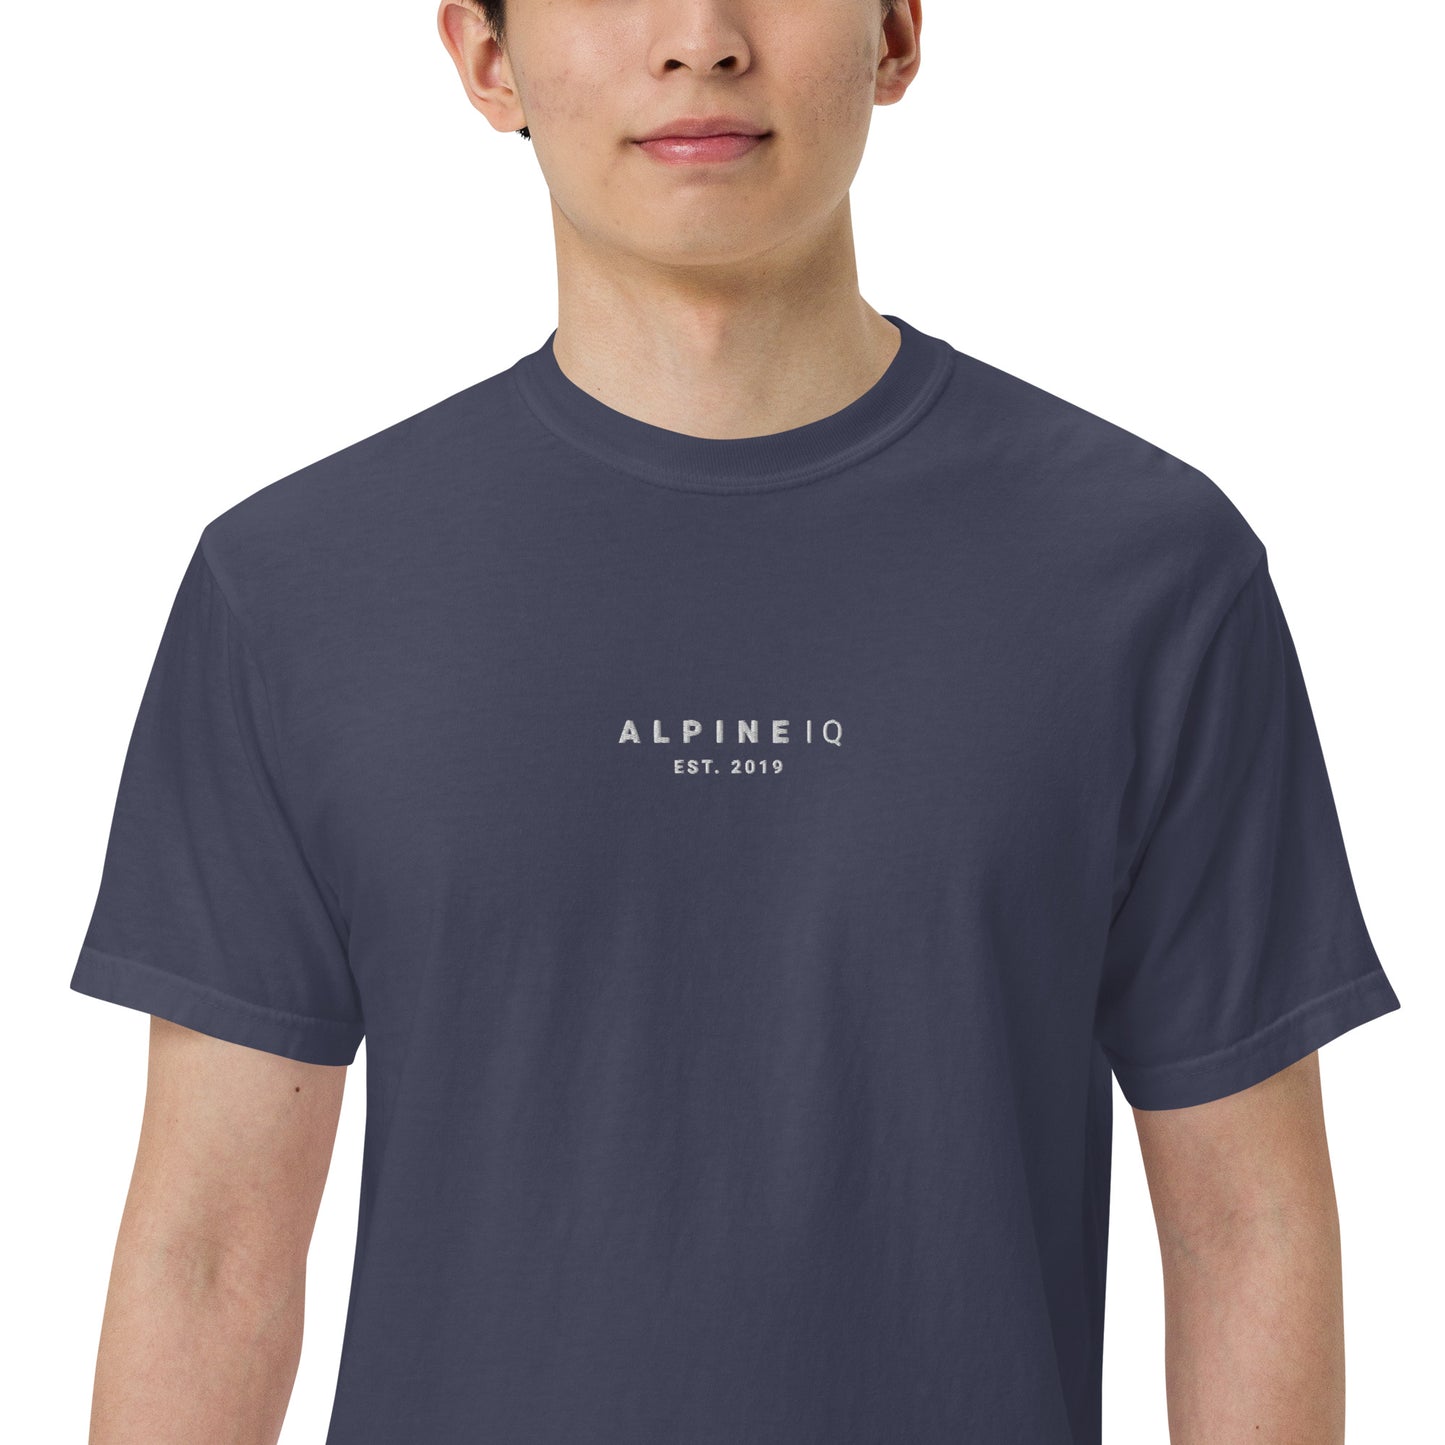 Alpine IQ Embroidered T-Shirt - Heavy Weight